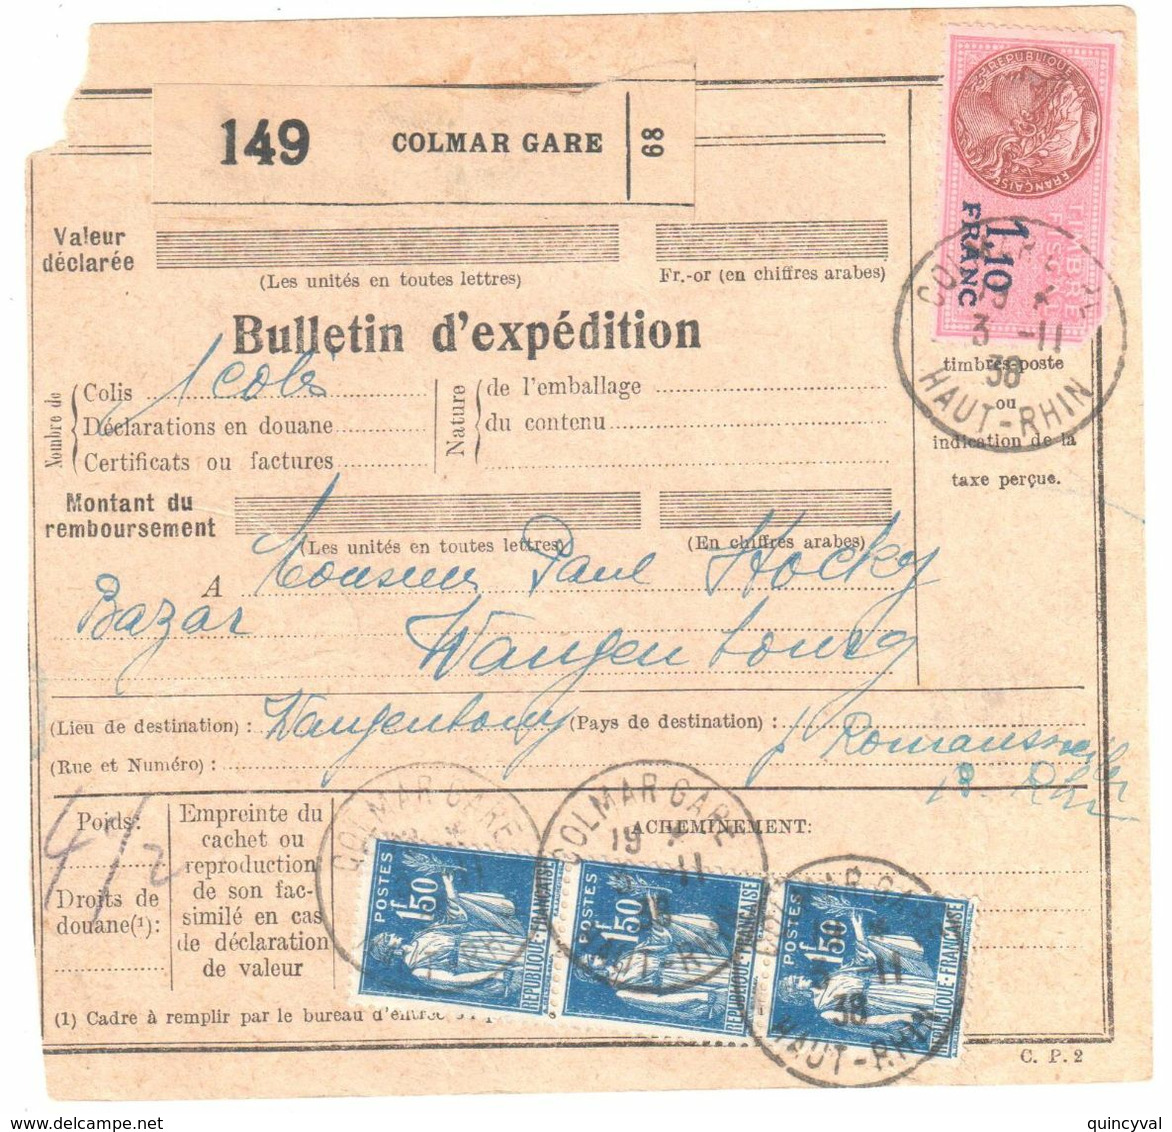 COLMAR GARE Bulletin D'expédition Alsace Lorraine 18 8 1937 Type Paix 1,50 F Bleu Yv 288  Local < 3kg 3 F Tf 1 5 27 - Briefe U. Dokumente